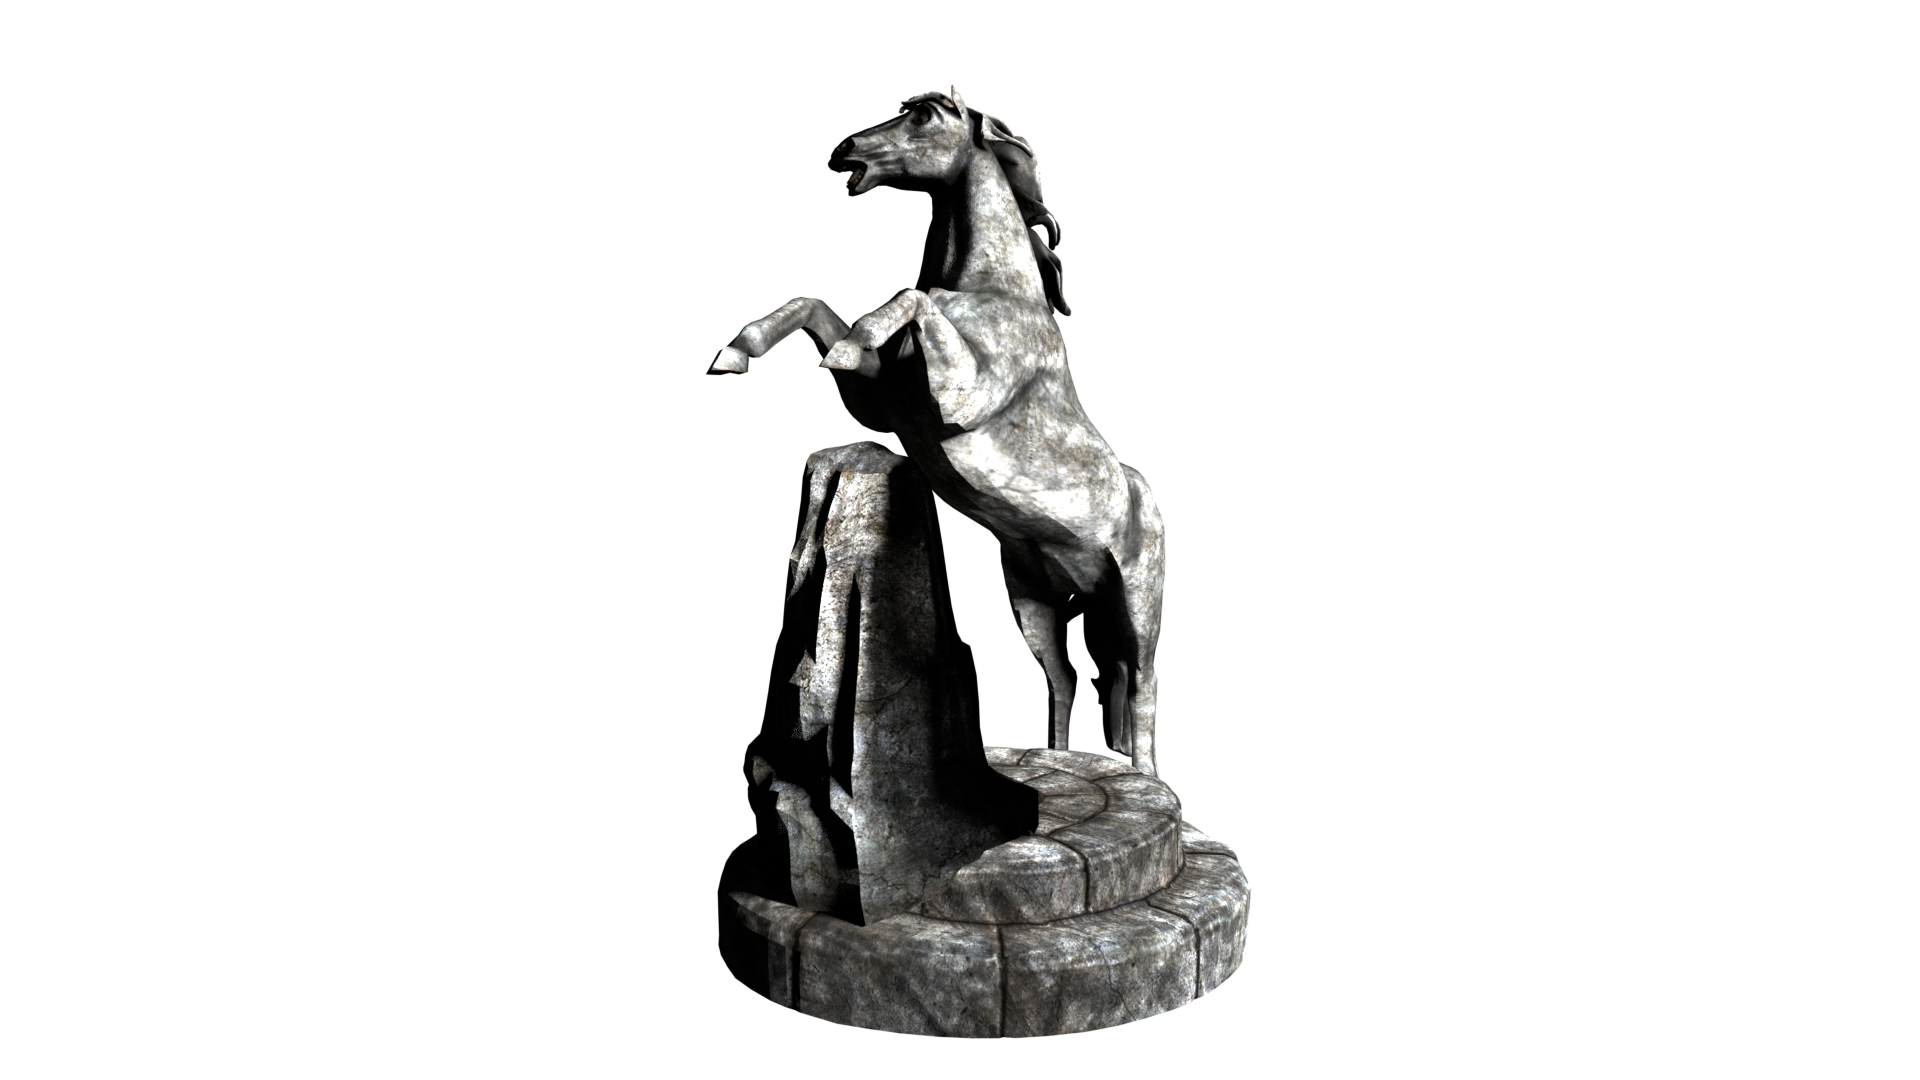 Headmaster horse statue